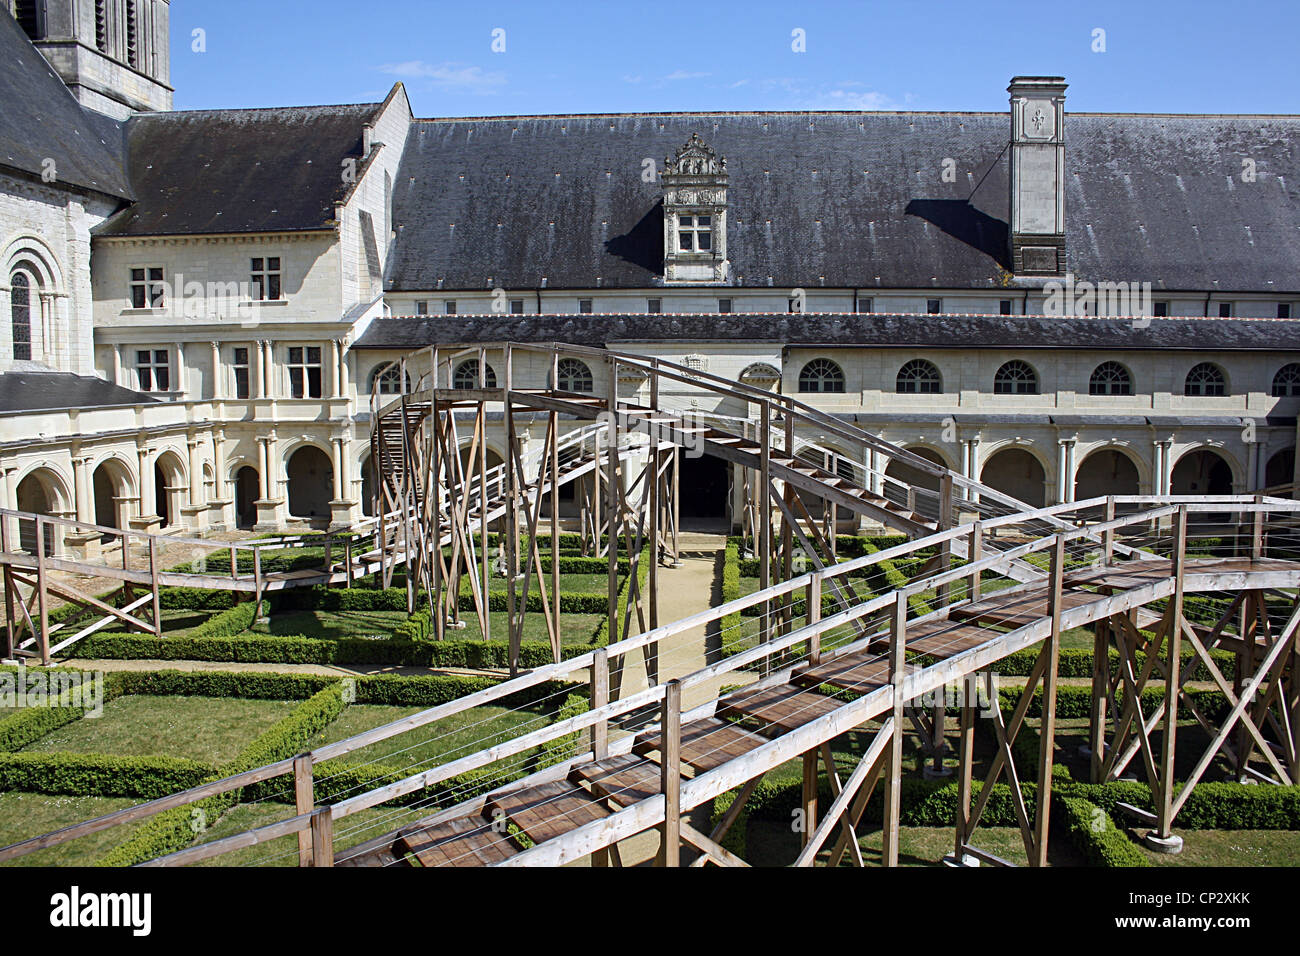 Fontevraud Abbey, abbaye de Fontevraud, France. Stock Photo